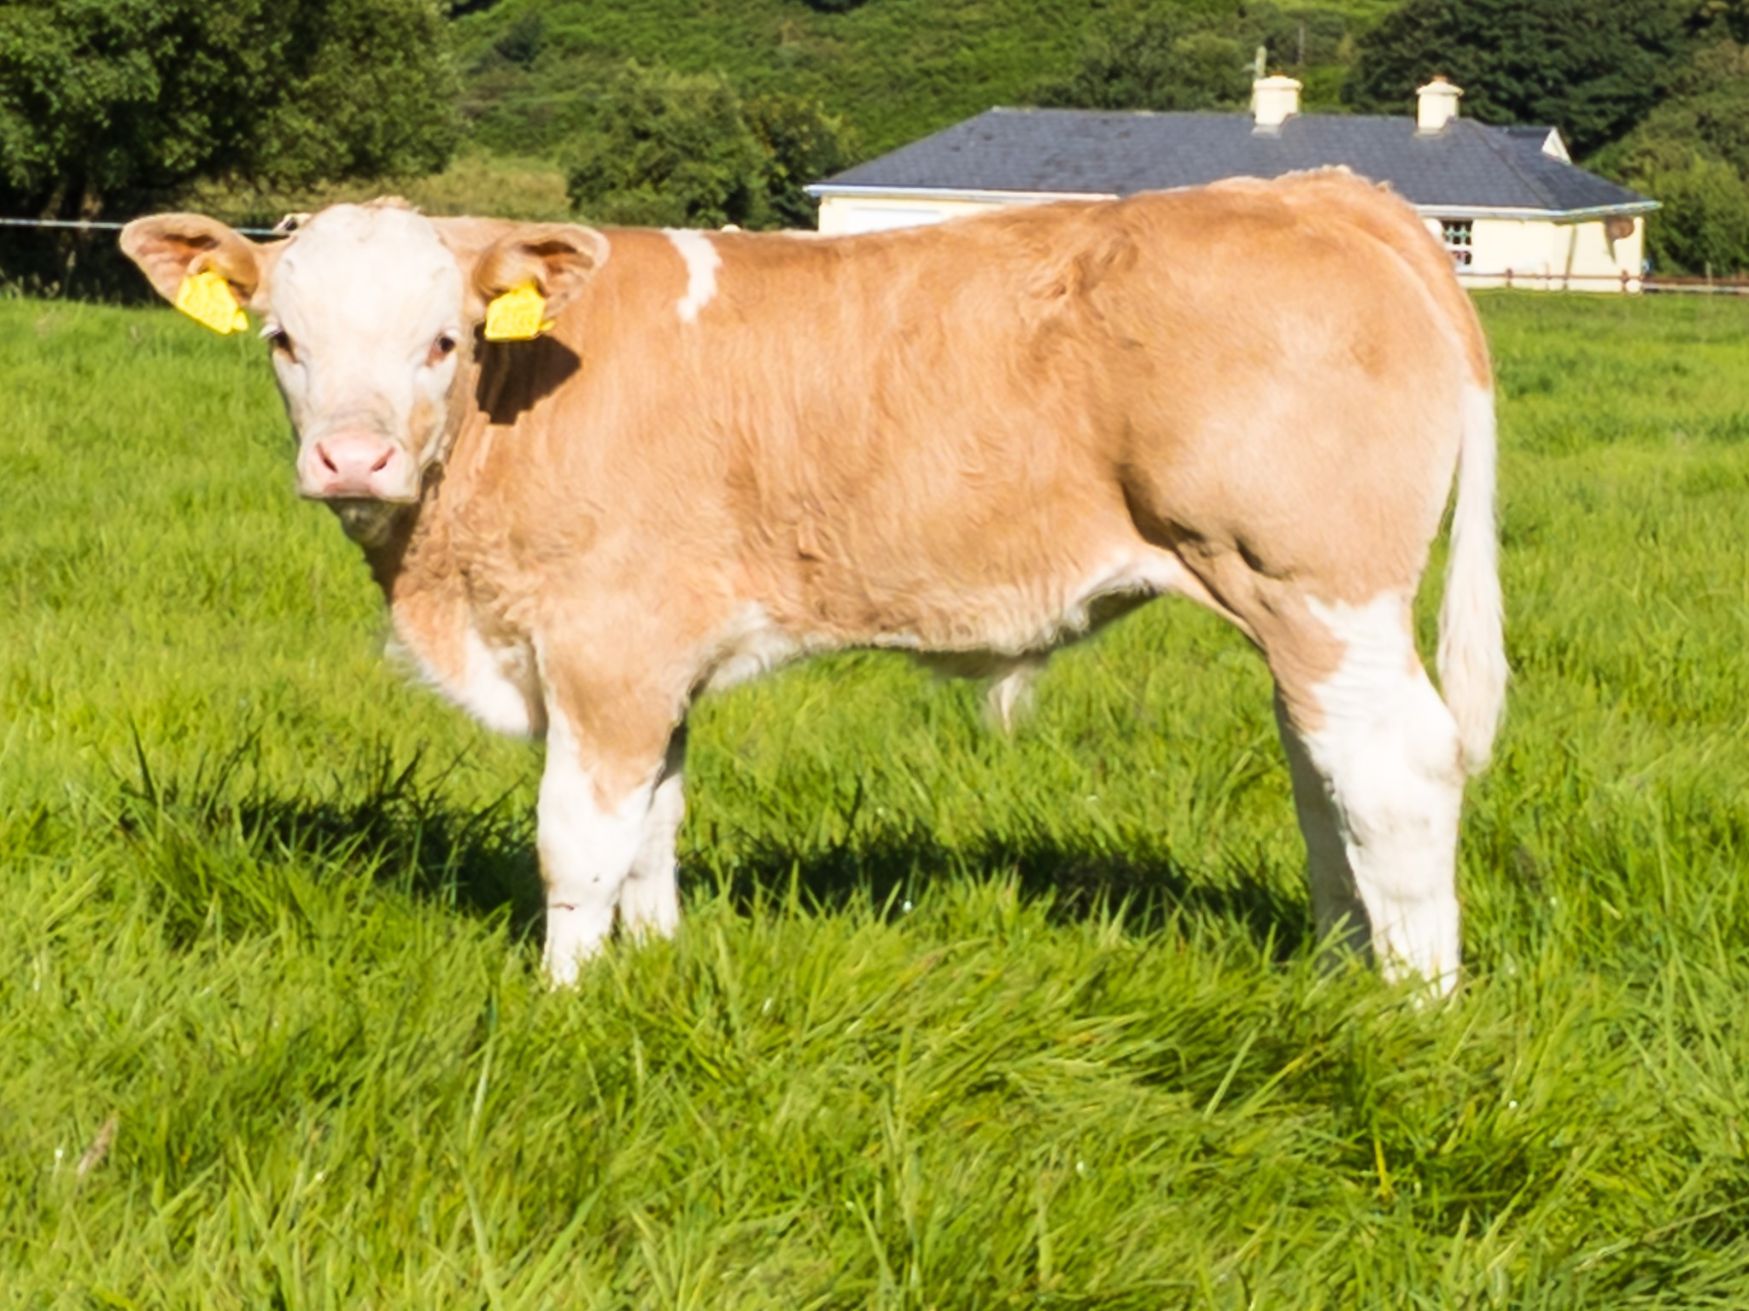 Leeherd Simmental, Simmental cattle, Simmental bulls, breeding cattle, livestock